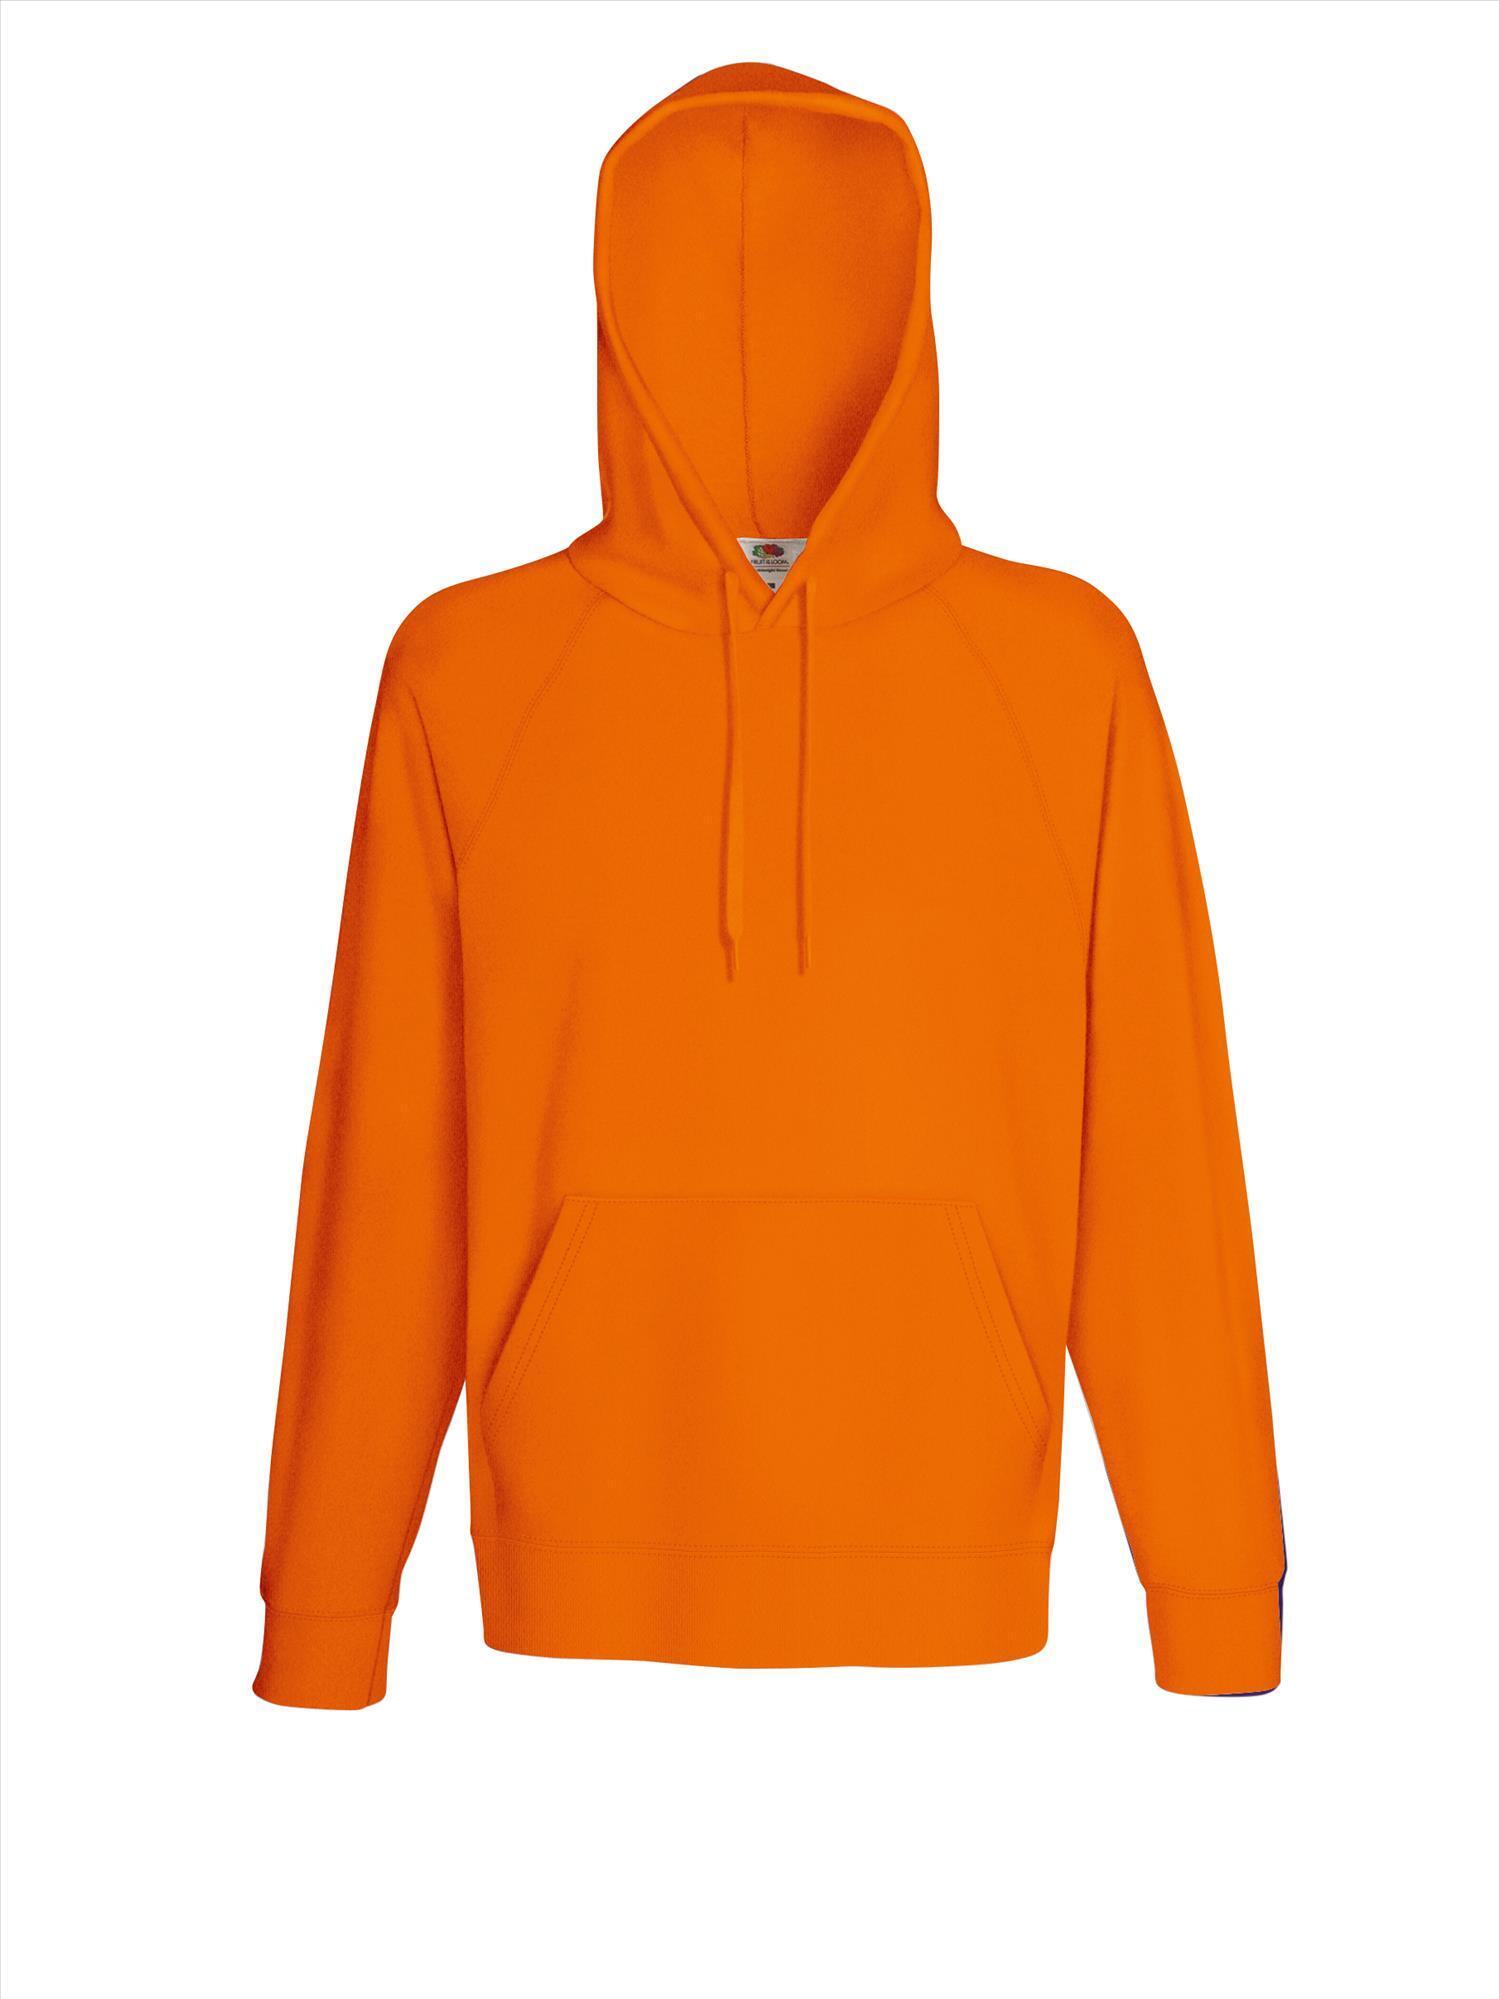 Lichtgewicht sweater met capuchon oranje voor mannen